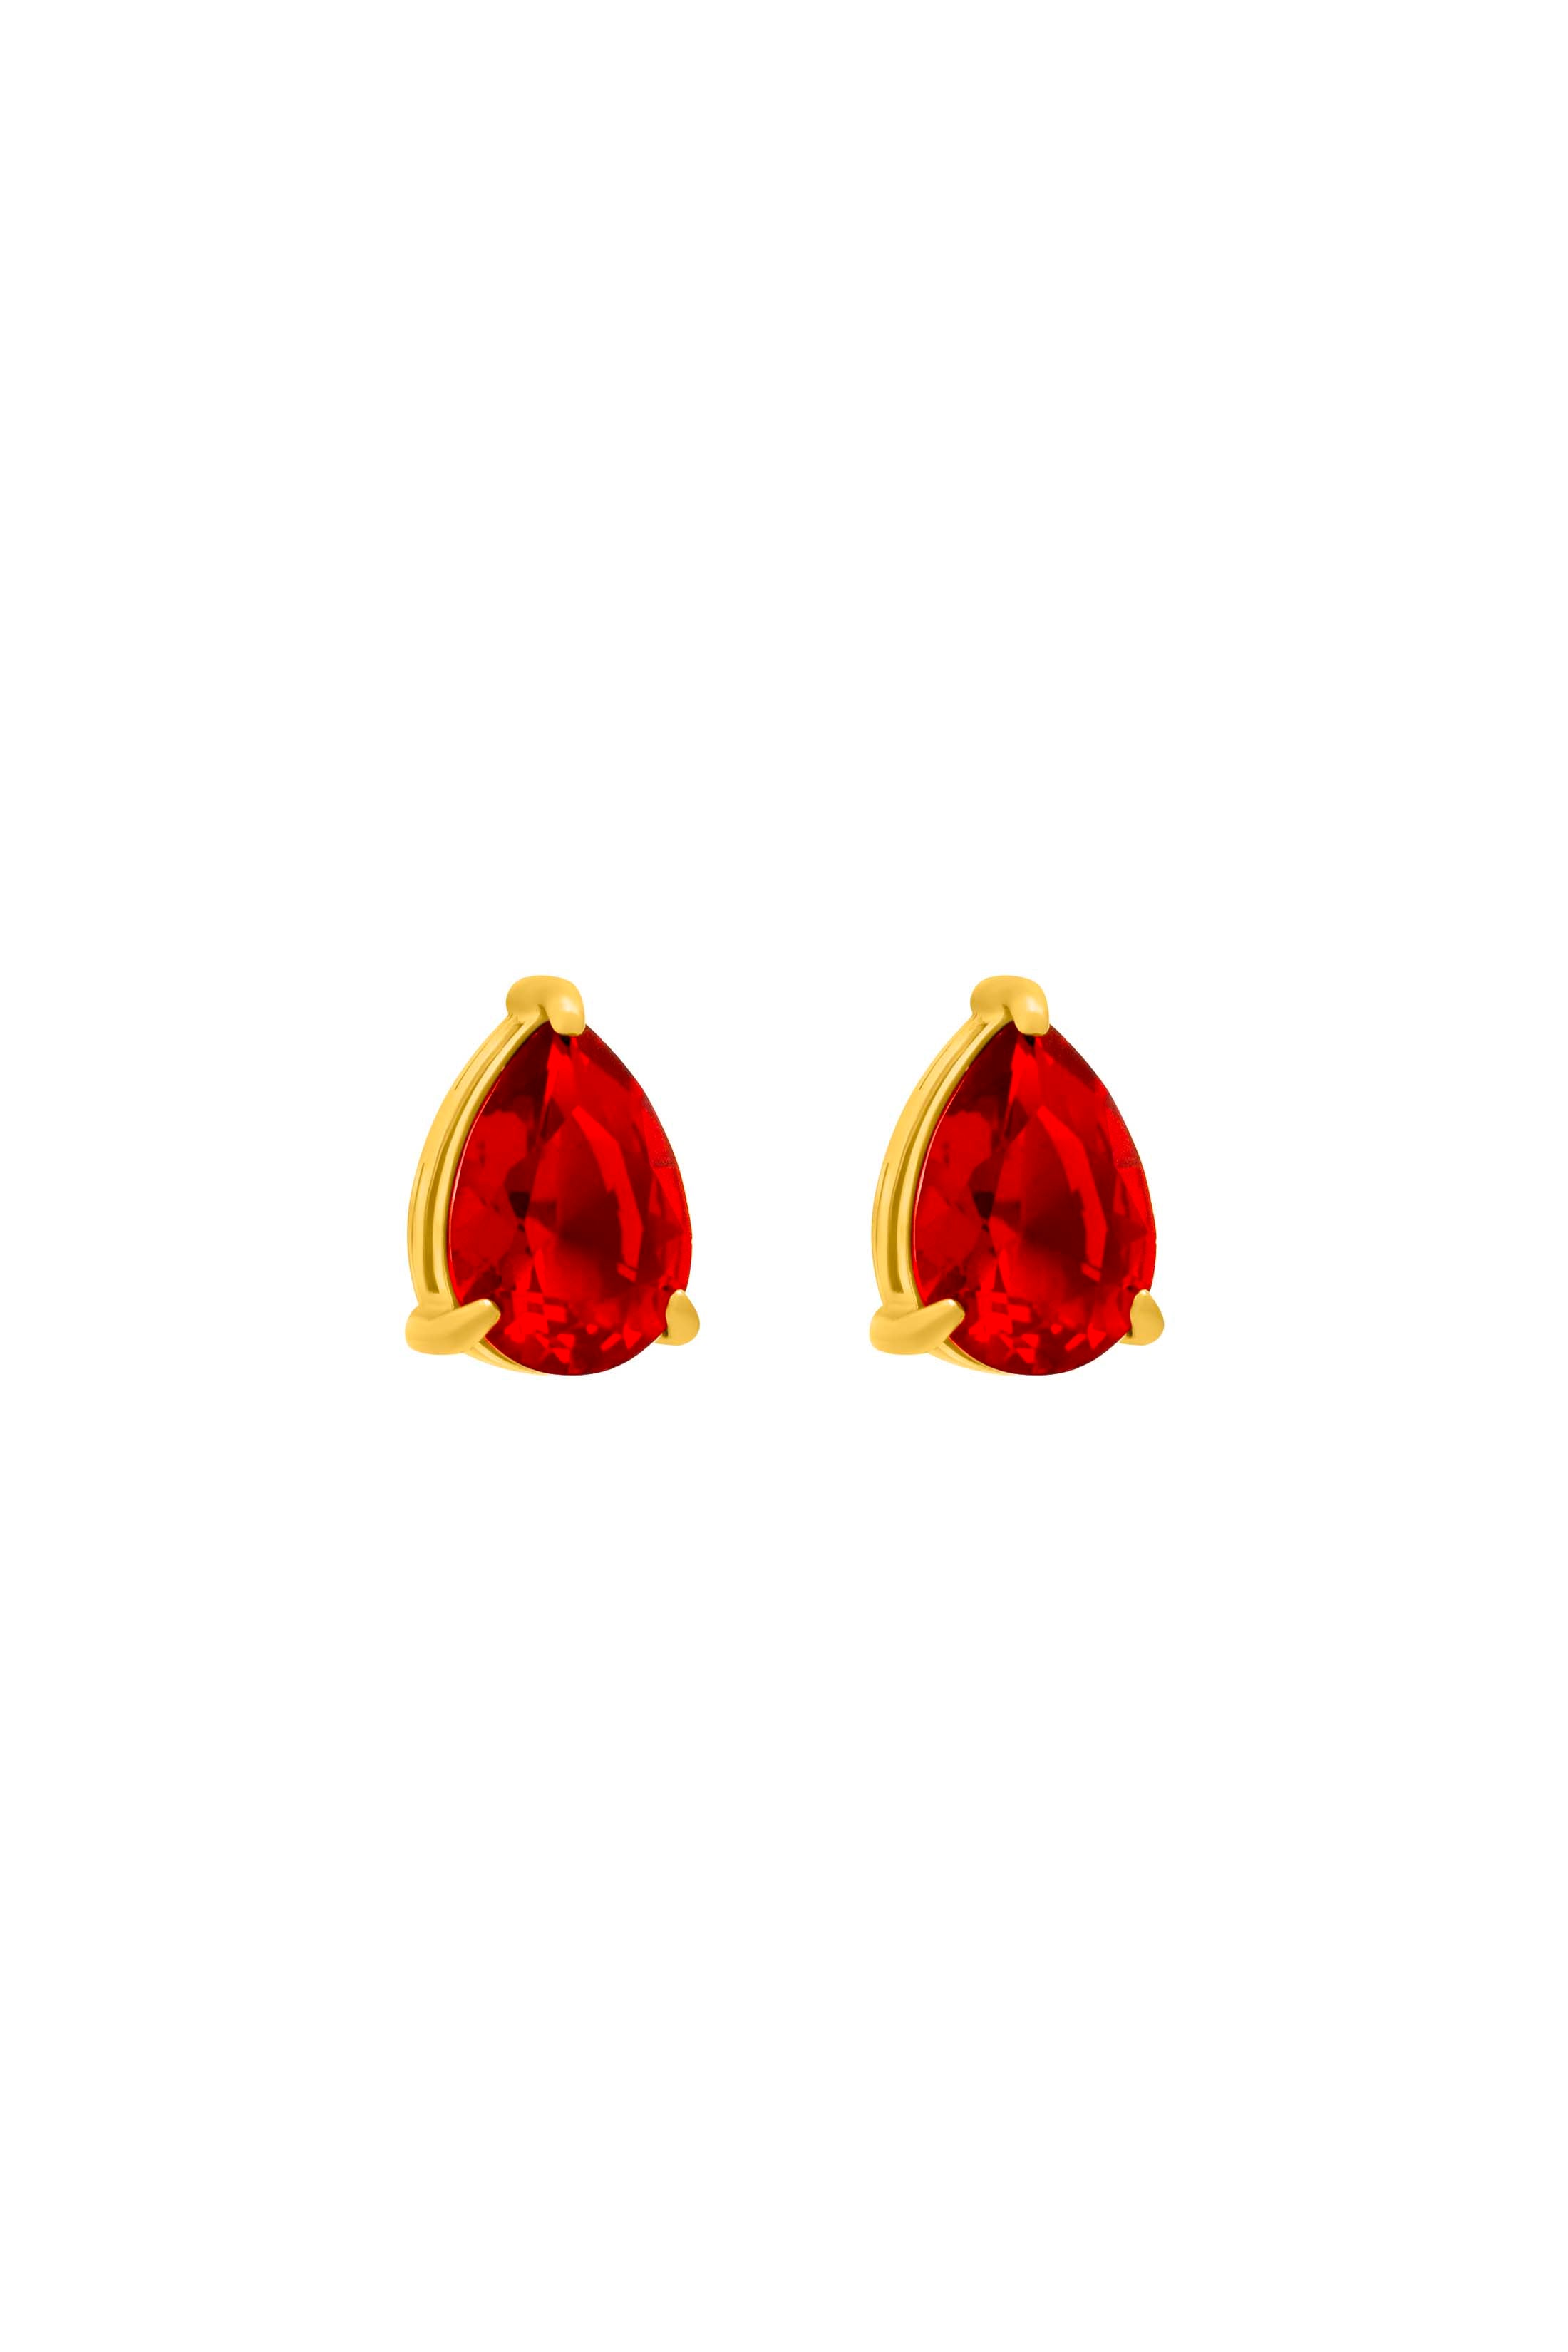 Carisma Red Stone Stud Earring Set